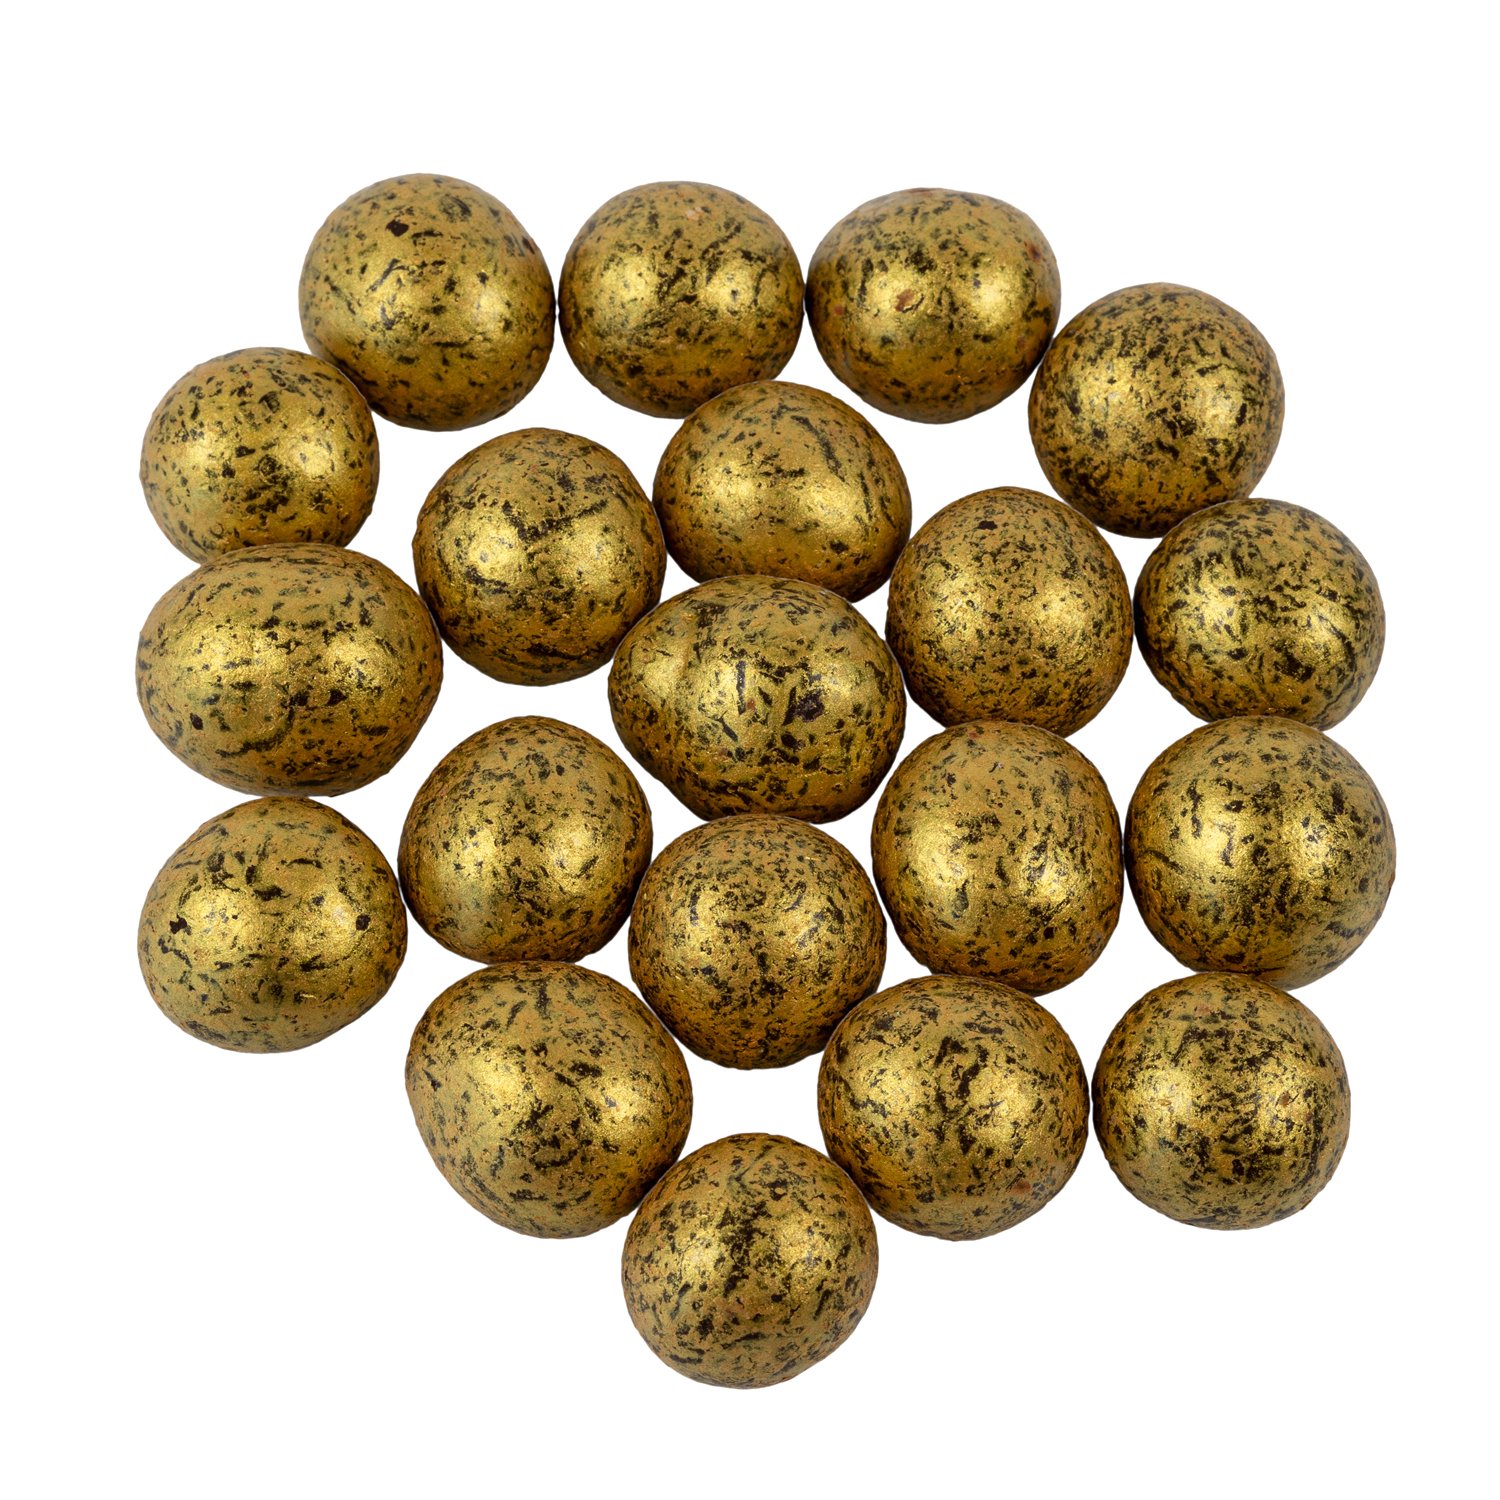 Les Perles Winter Golden - toasted hazelnut in dark chocolate gold - 1kg